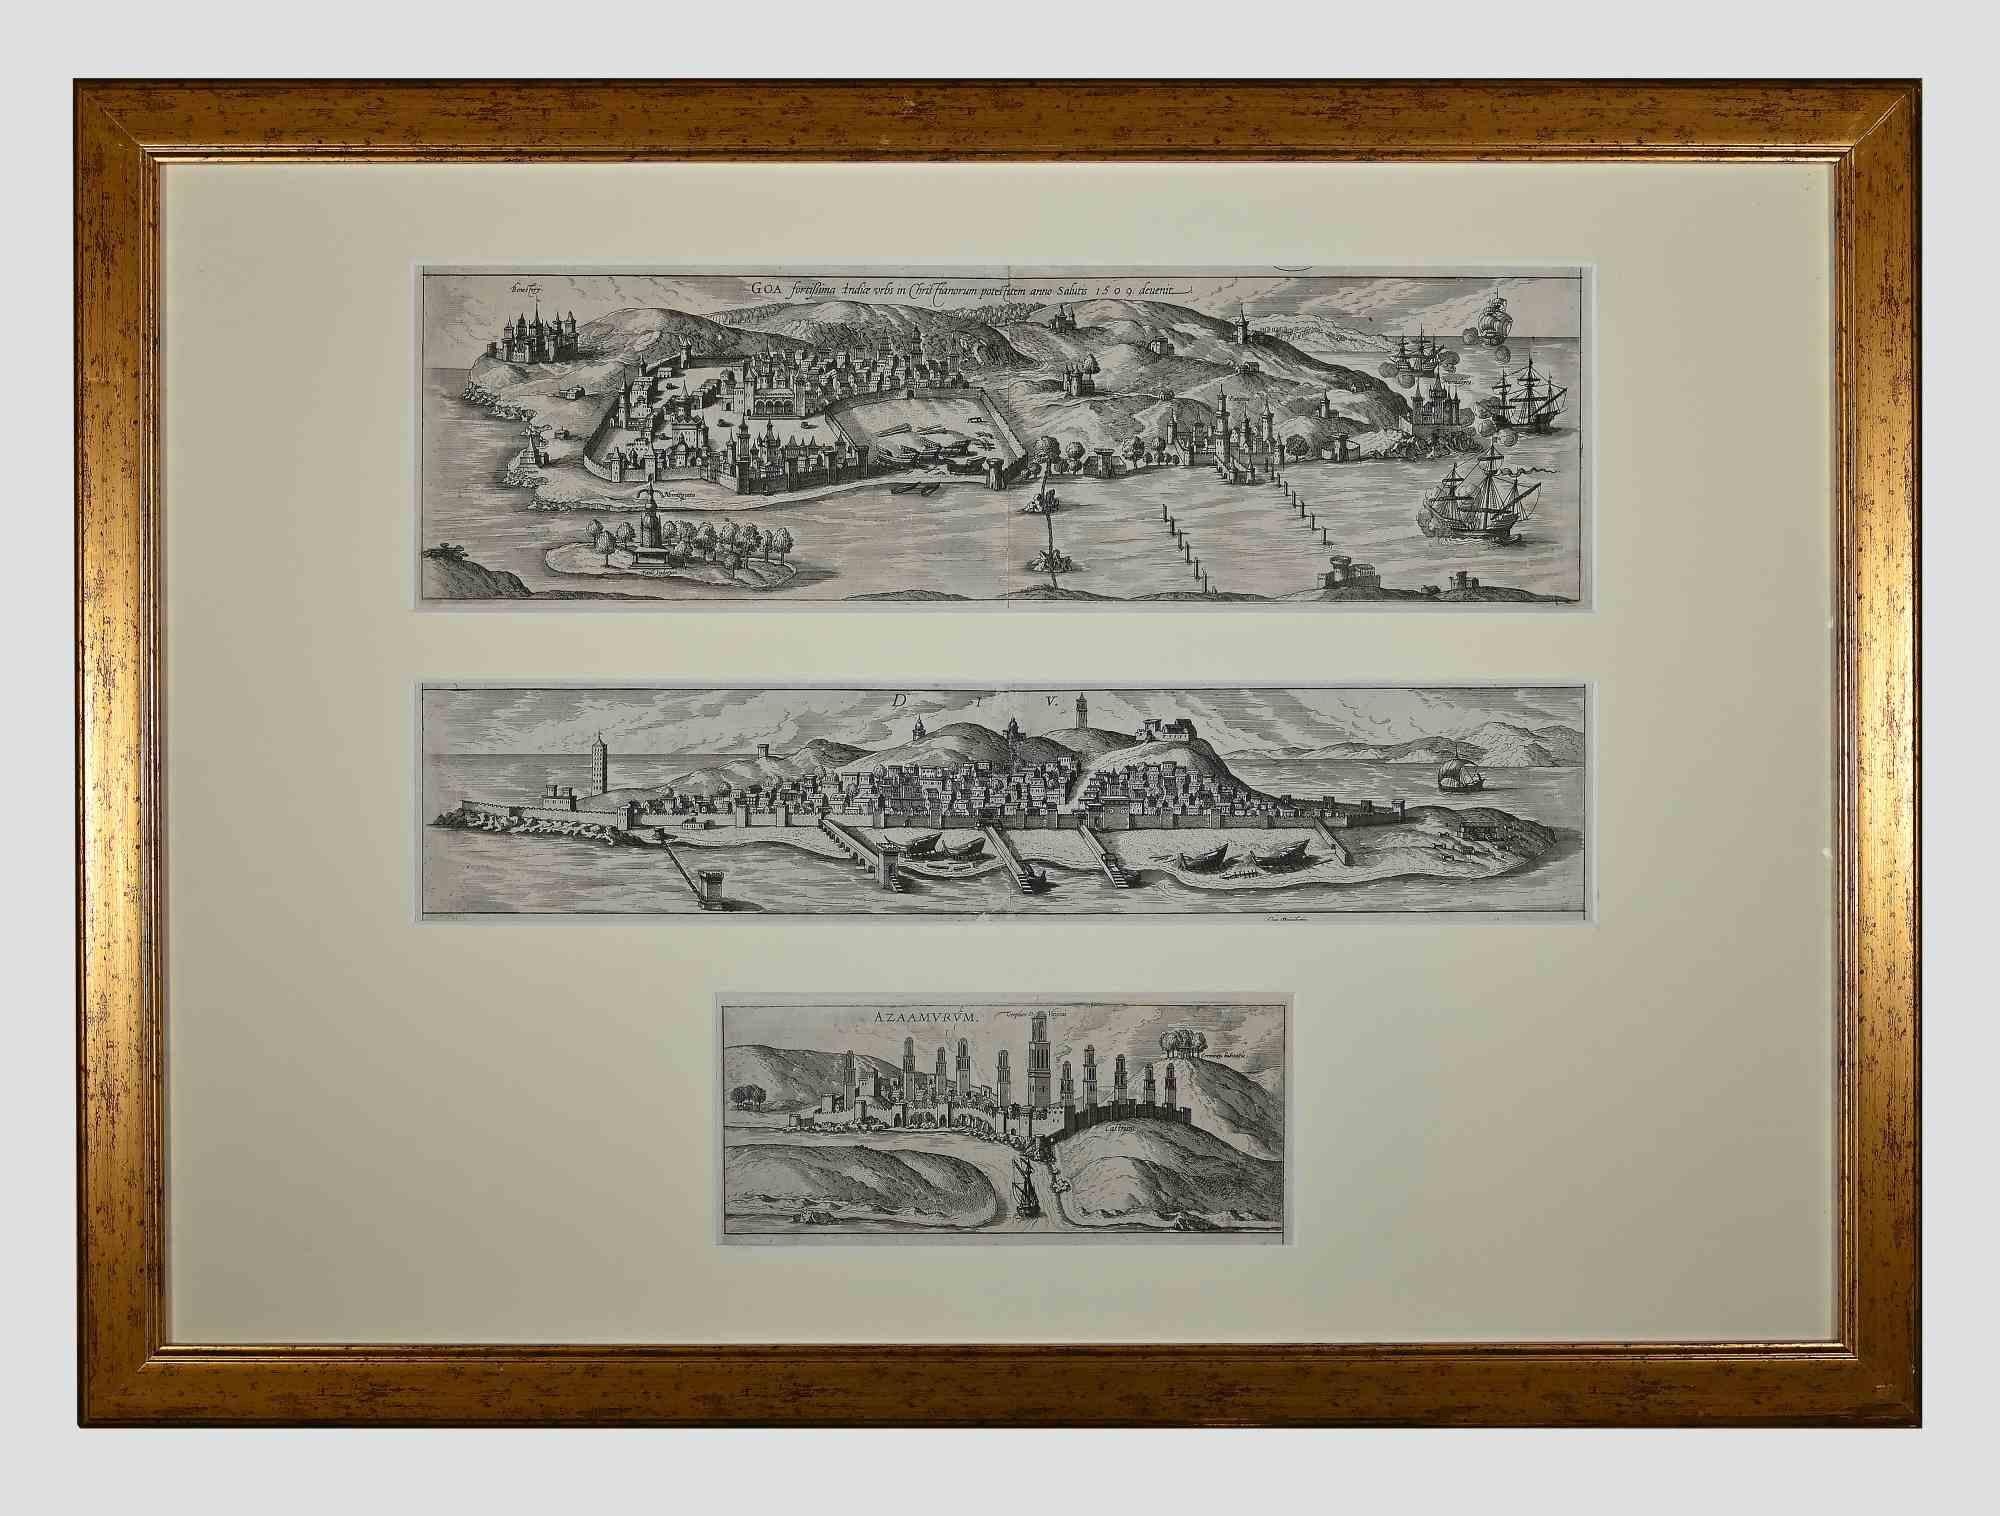 Frans Hogenberg Landscape Print - Cities - Etching by Braun Hogenberg - 1618